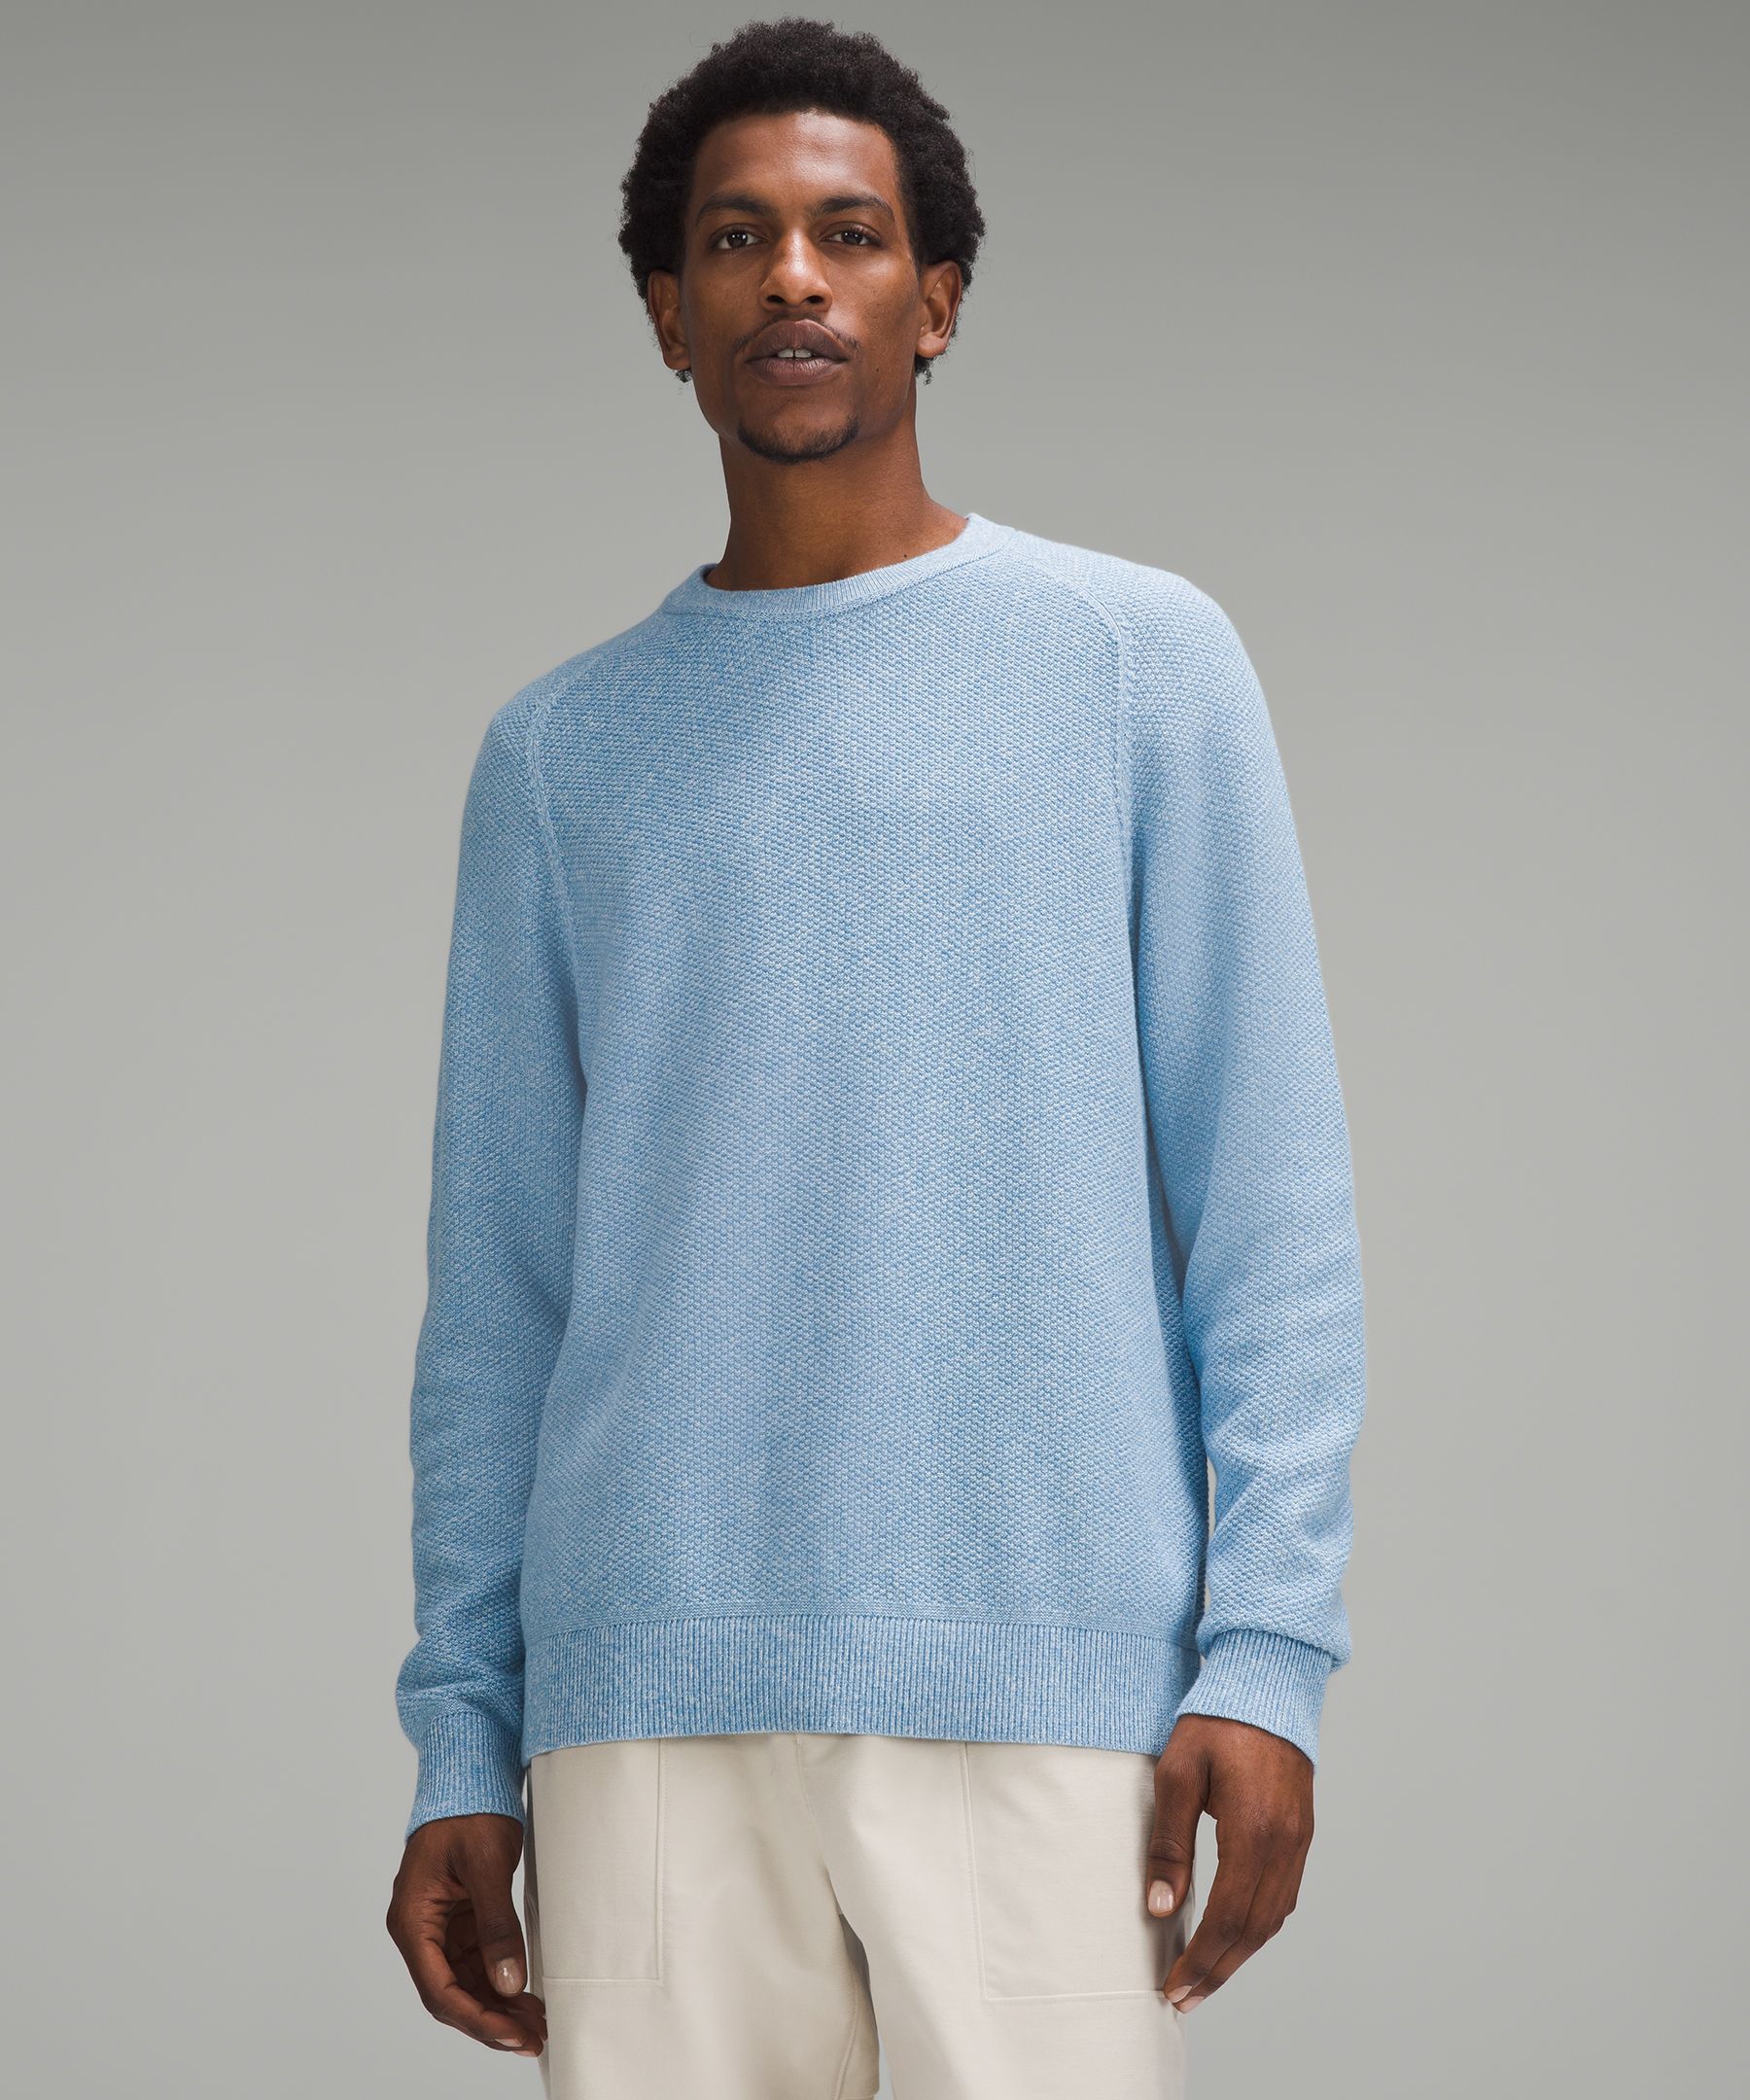 Lululemon Textured Knit Crewneck Sweater